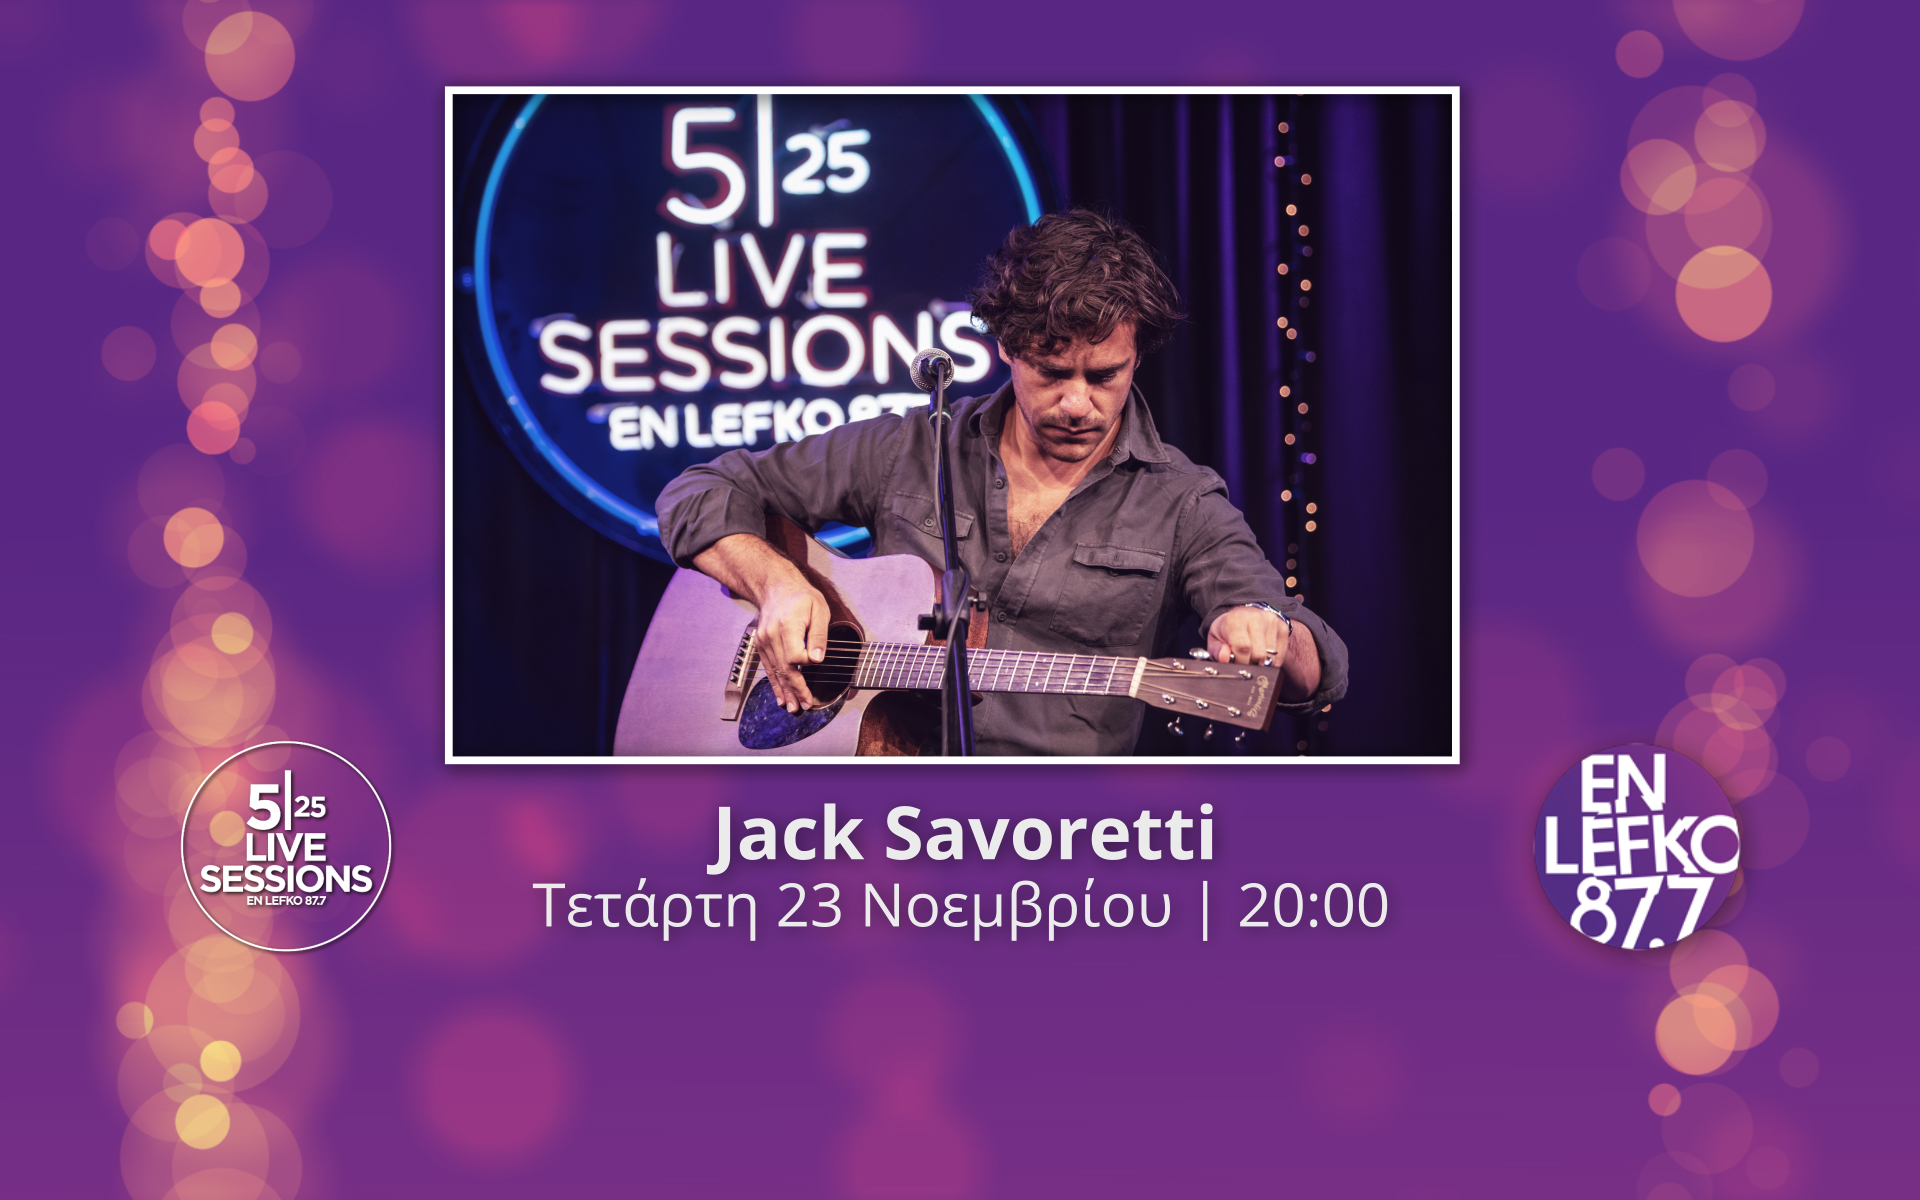 o-jack-savoretti-sta-5-25-live-sessions-toy-en-lefko-87-7-562136377